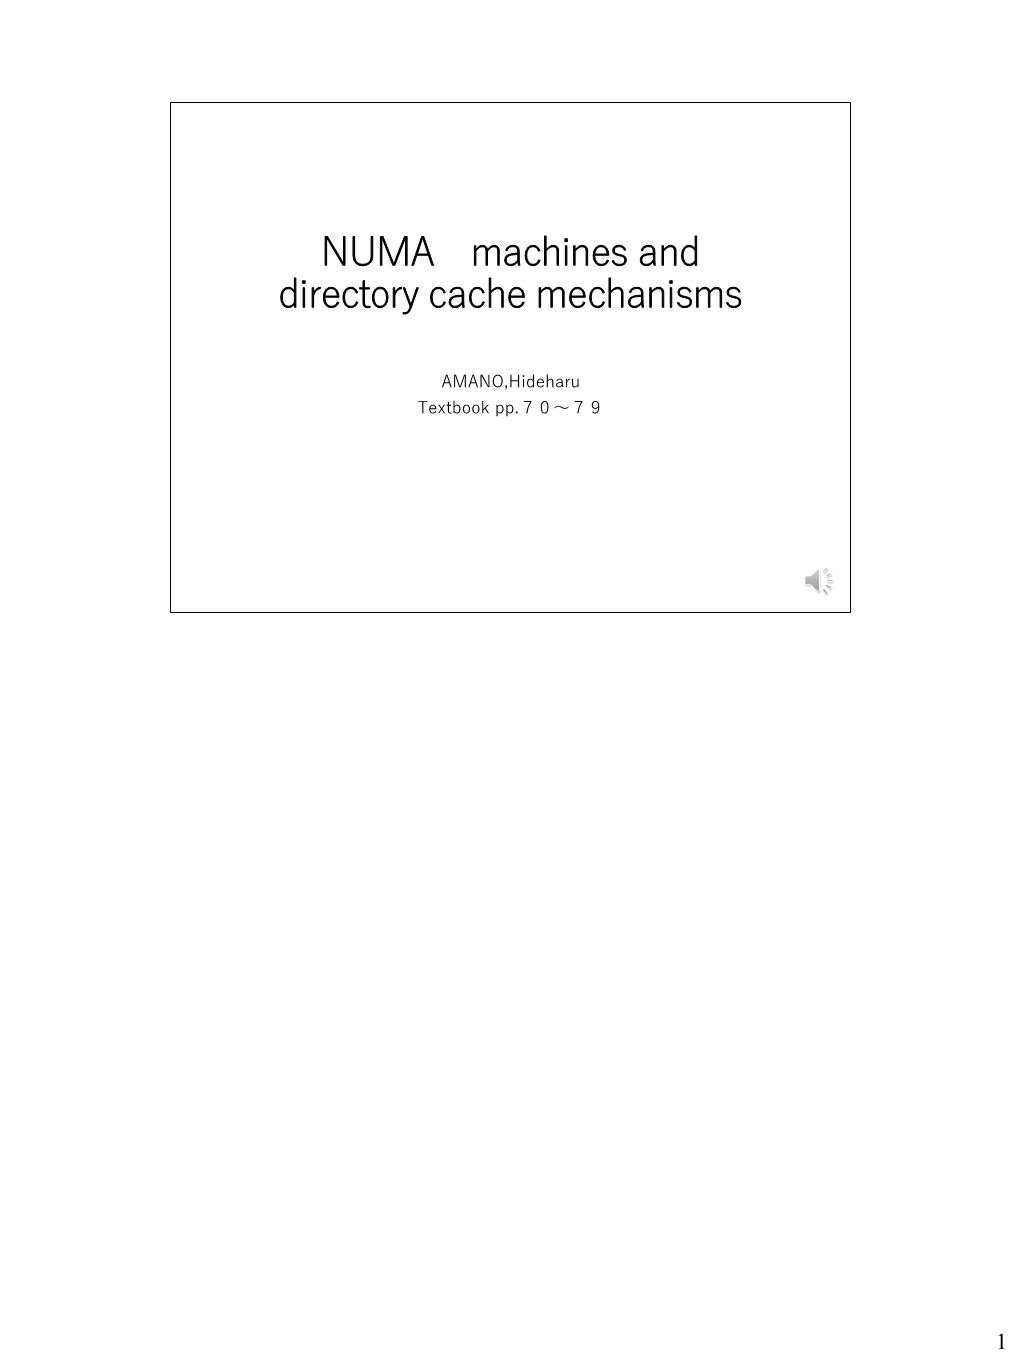 NUMA Machines and Directory Cache Mechanisms